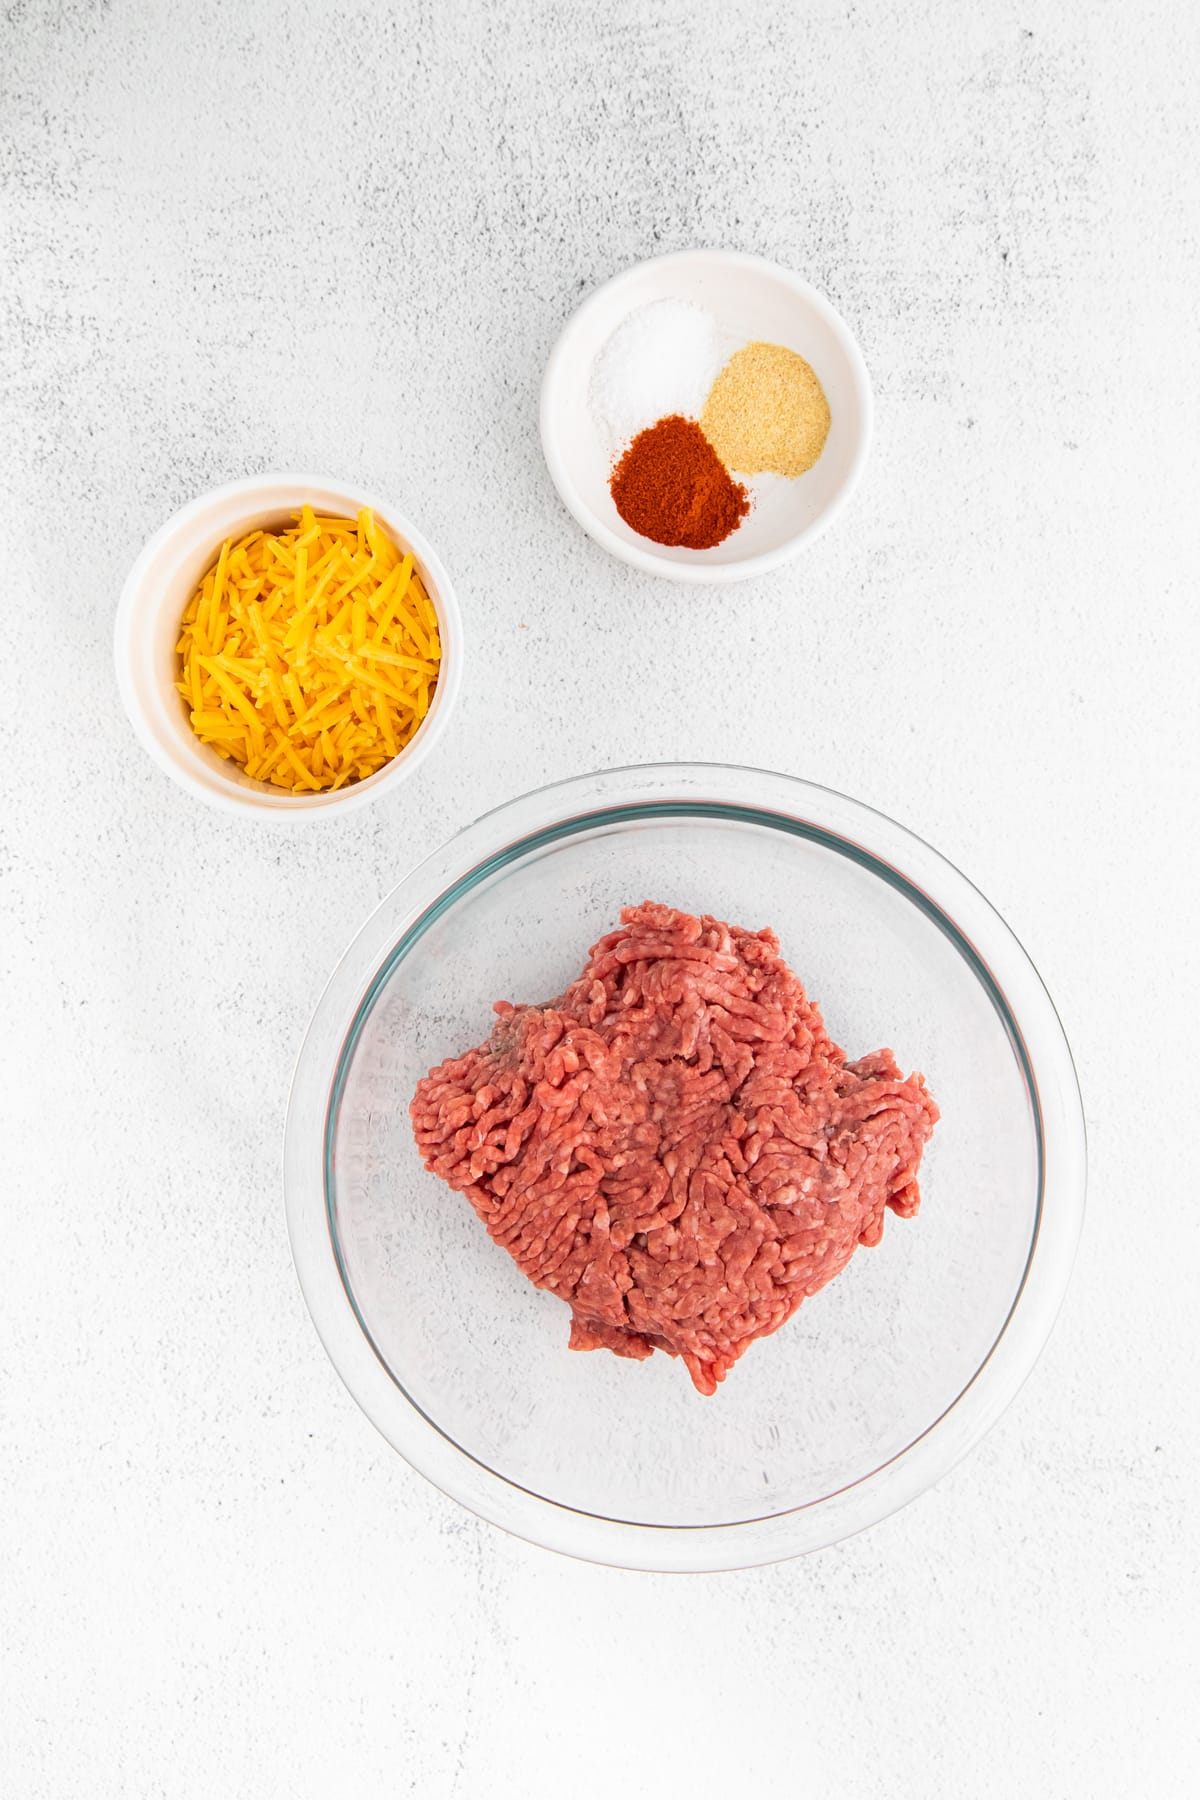 Air Fryer Juicy Lucy Burgers ingredients include ground beef, garlic powder, paprika, kosher salt, and cheddar cheese